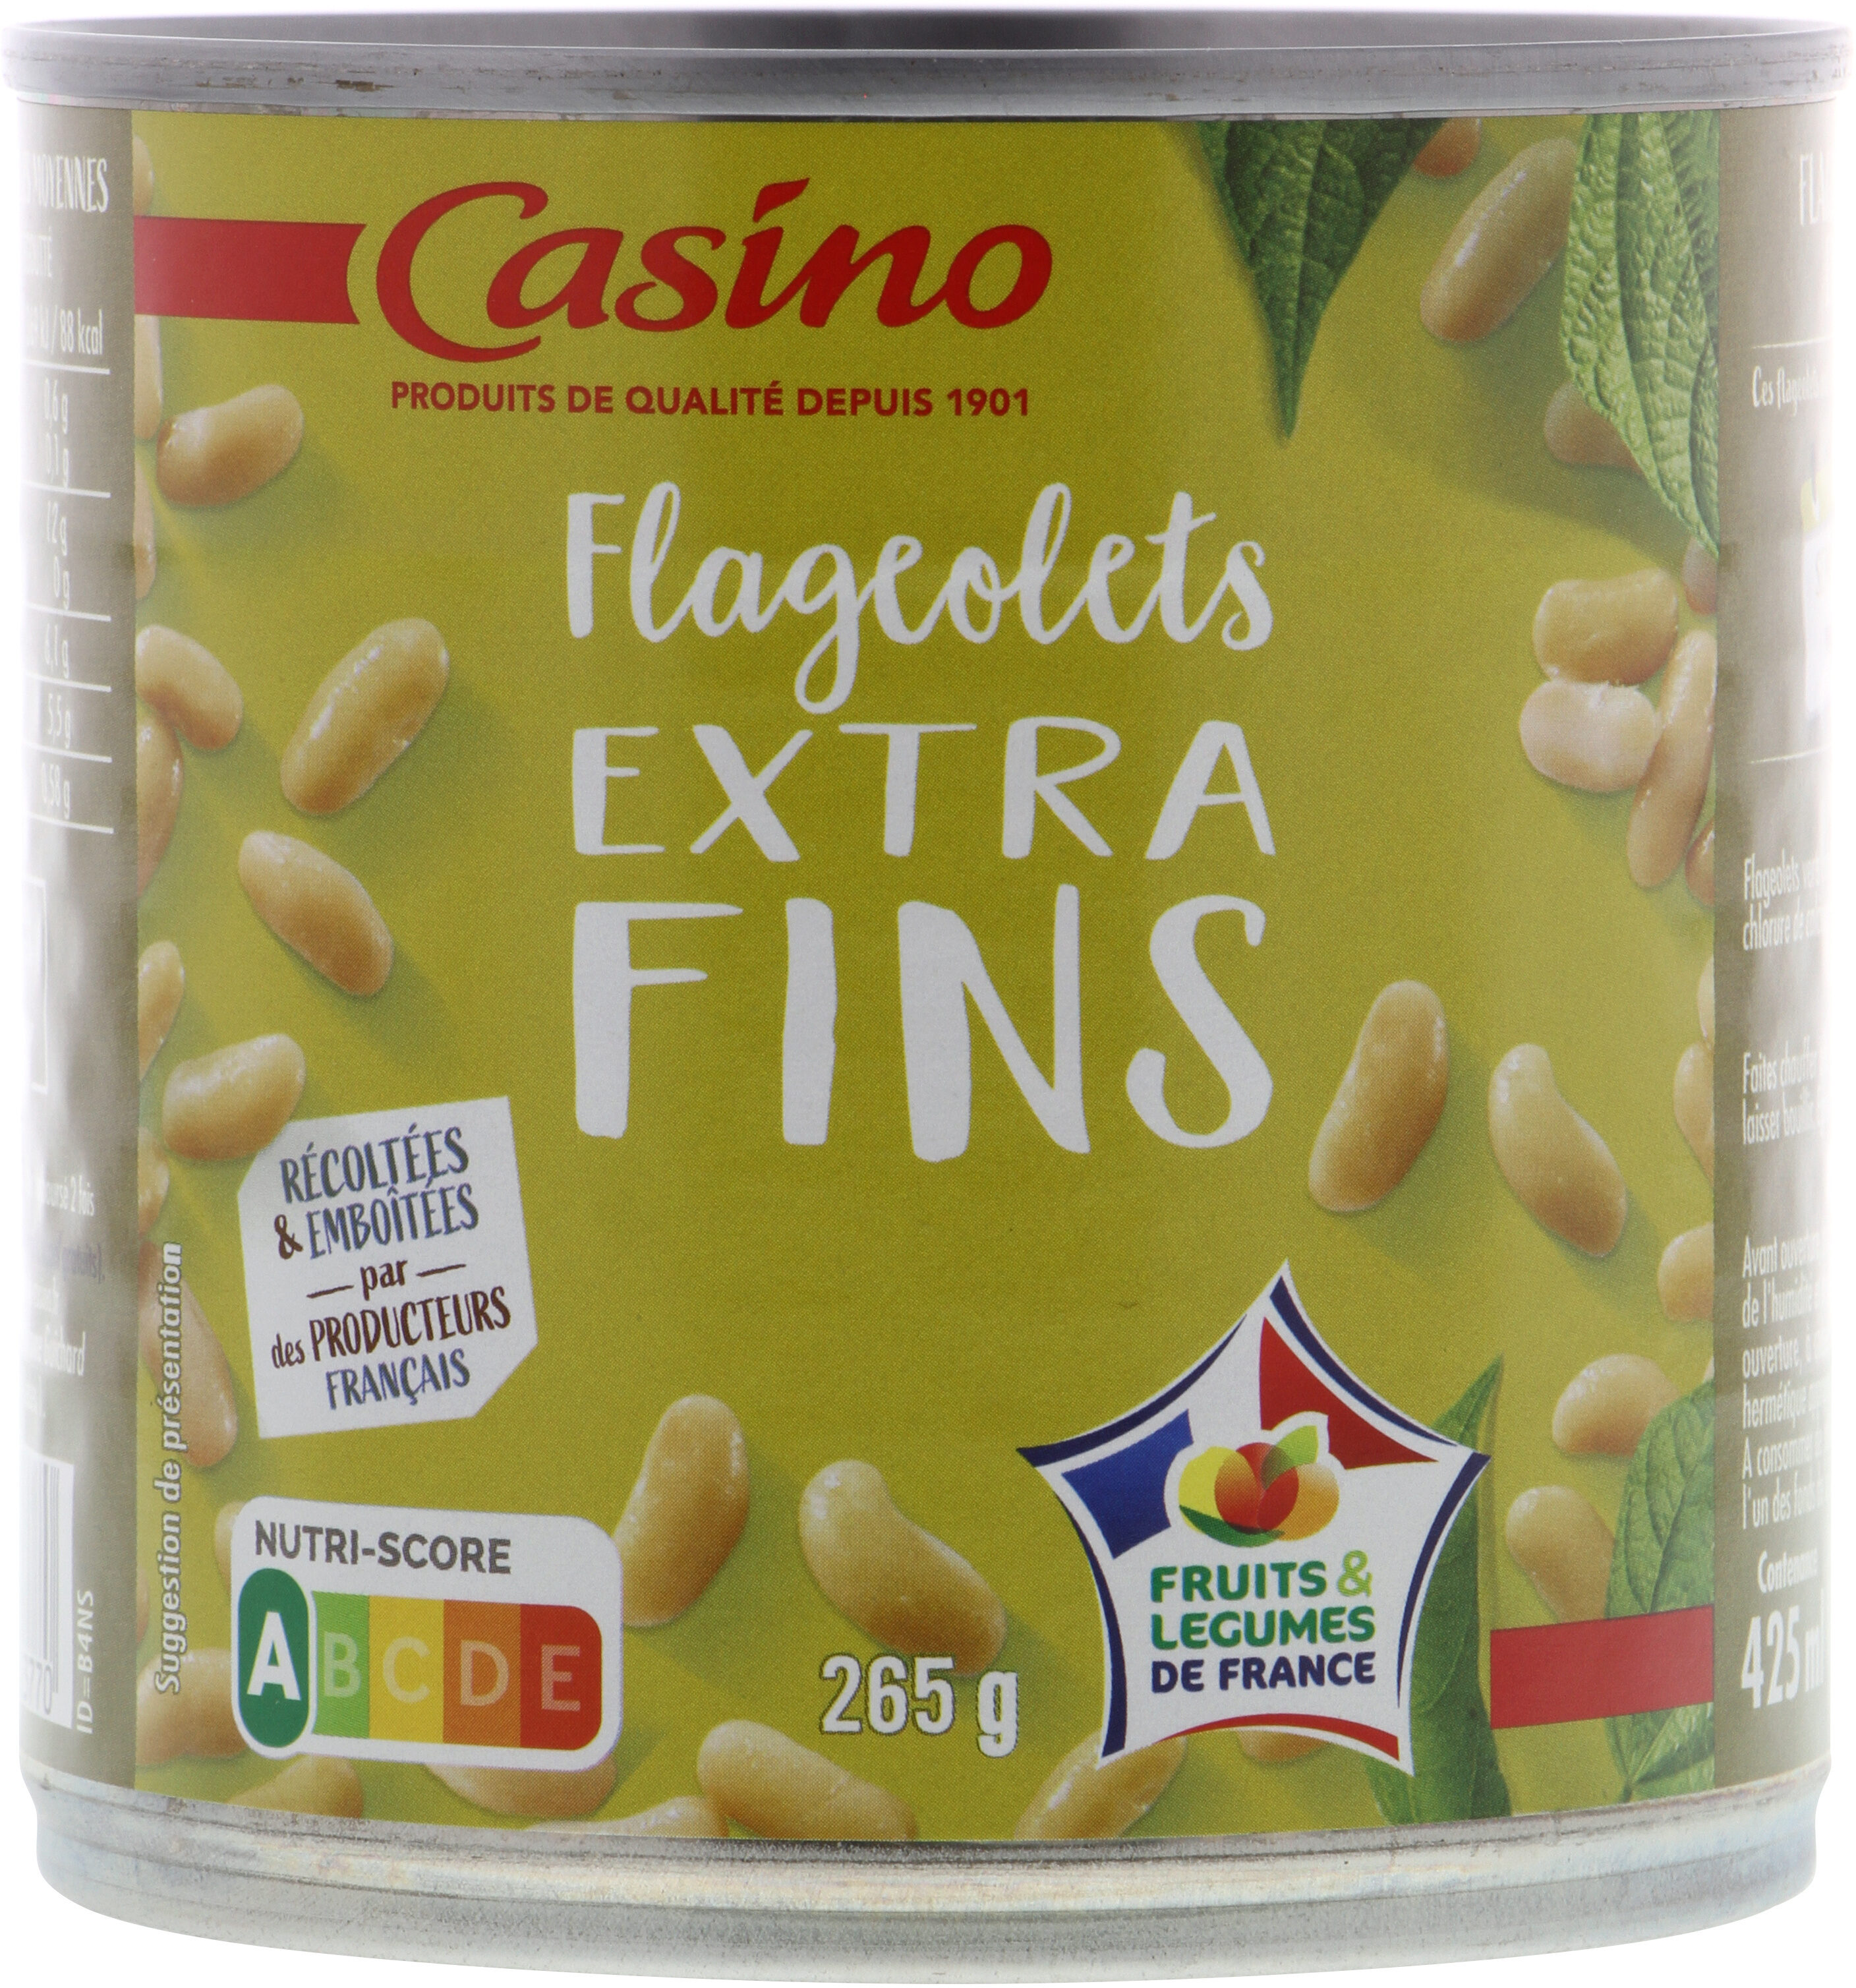 Flageolets verts extrafins - Product - fr